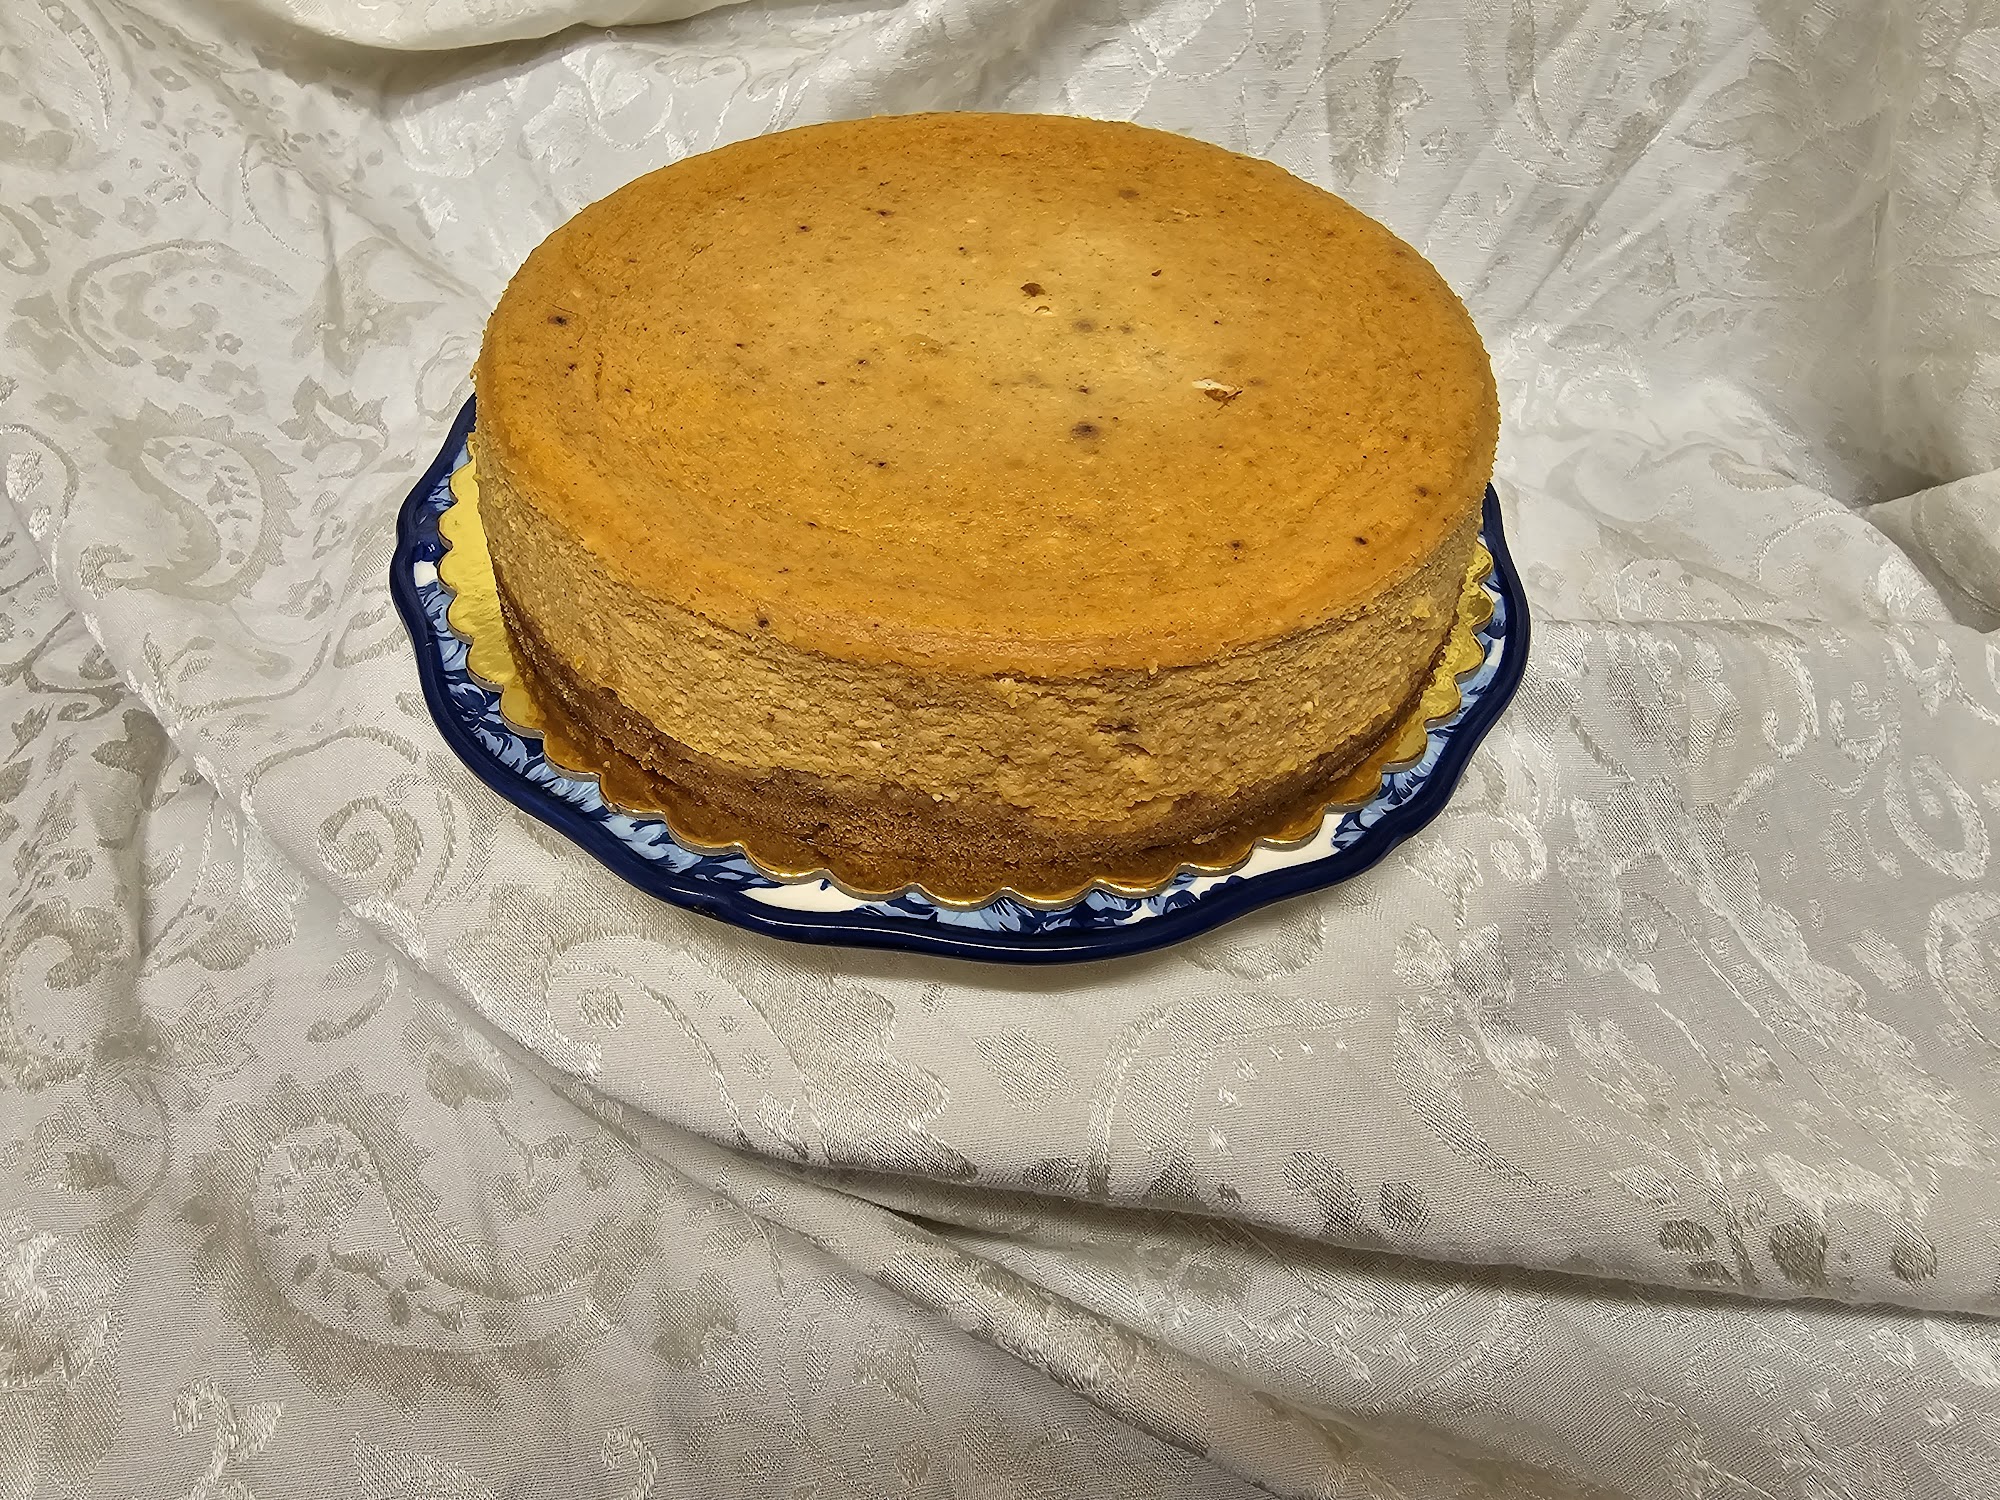 The Cheesecake Baker